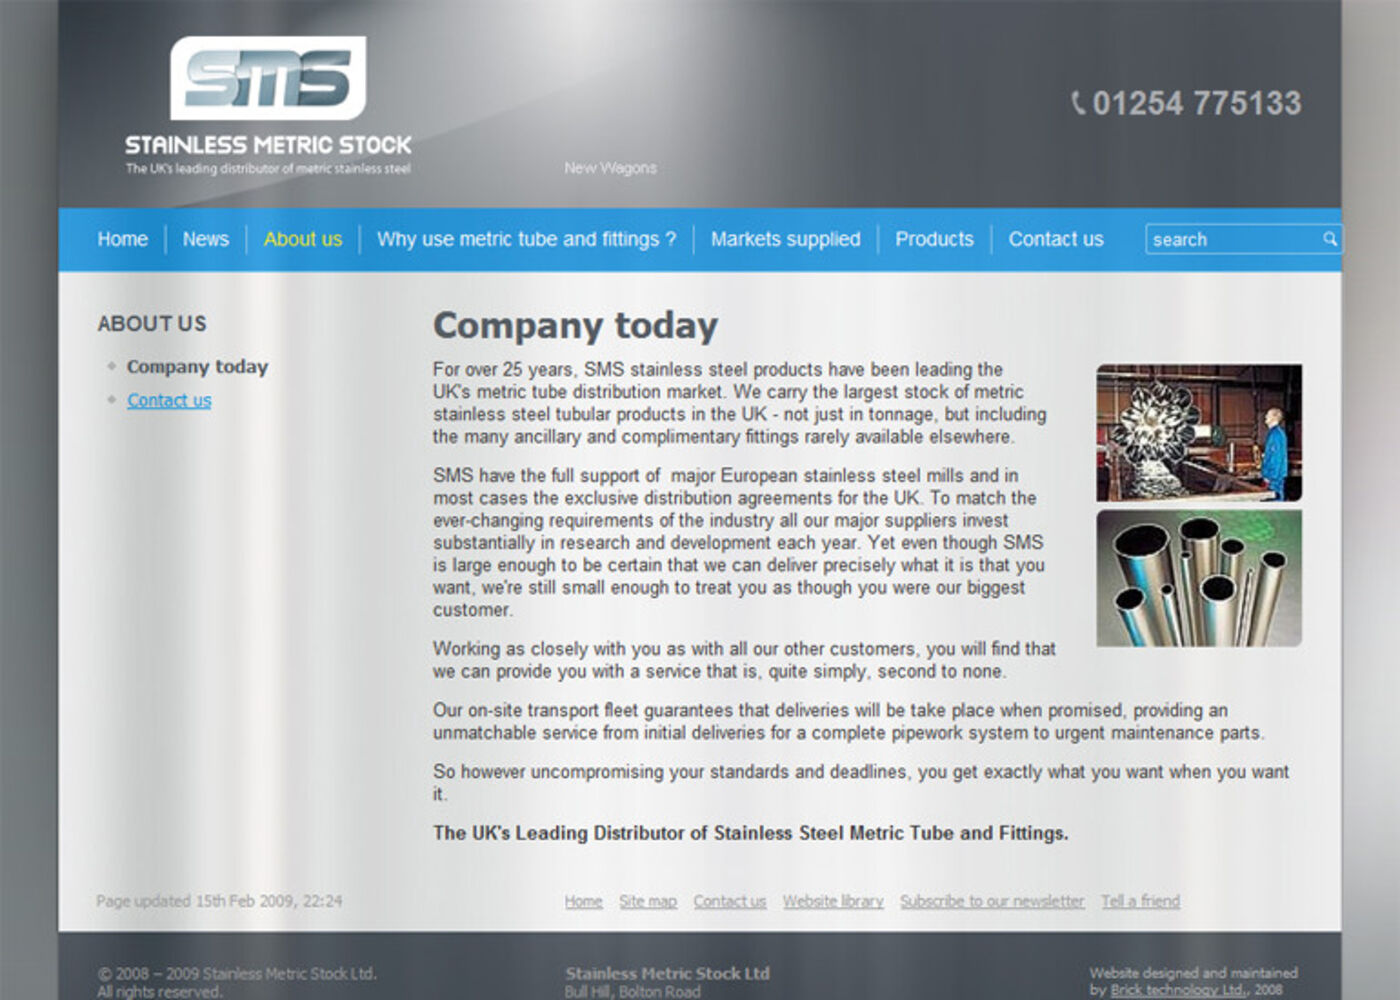 Stainless Metric Stock Regular page - SMS Ltd